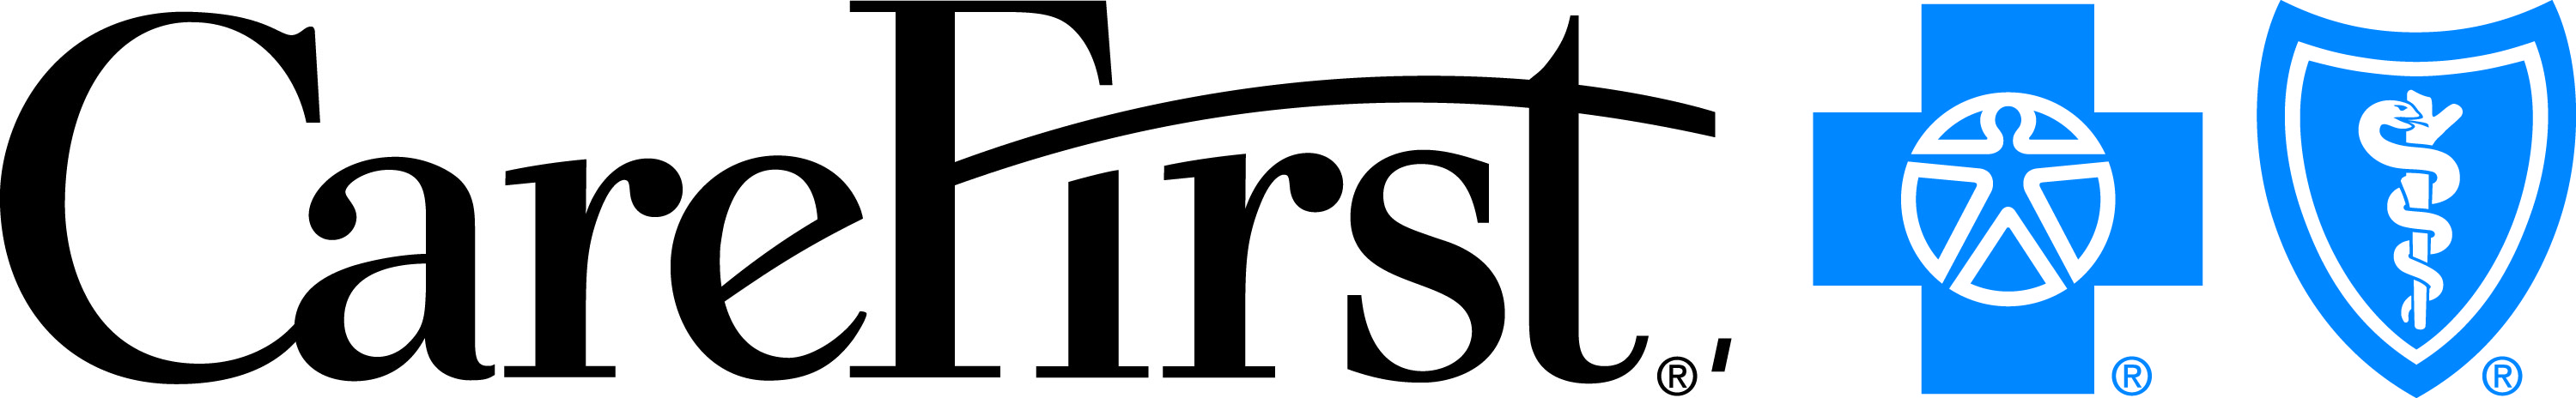 Carefirst logo